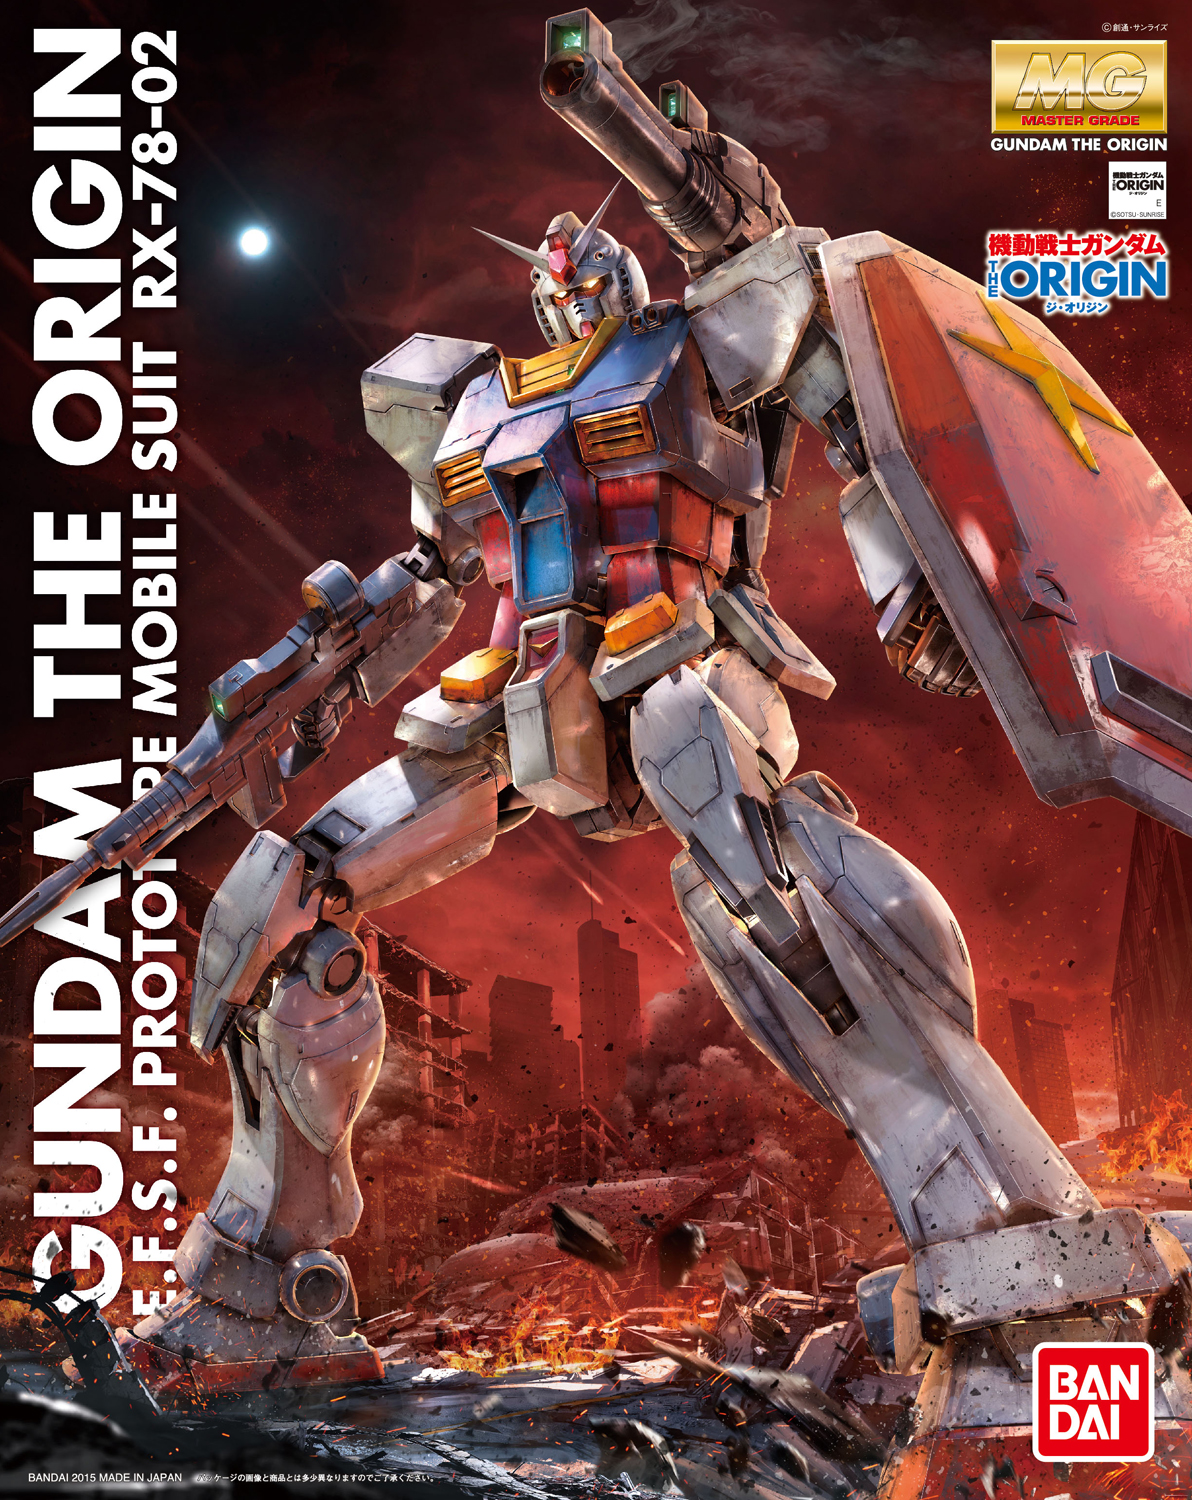 MG 1/100 RX-78-02 ガンダム（THE ORIGIN版） [Gundam The Origin] 0201314 4549660013143 5062847 4573102628473